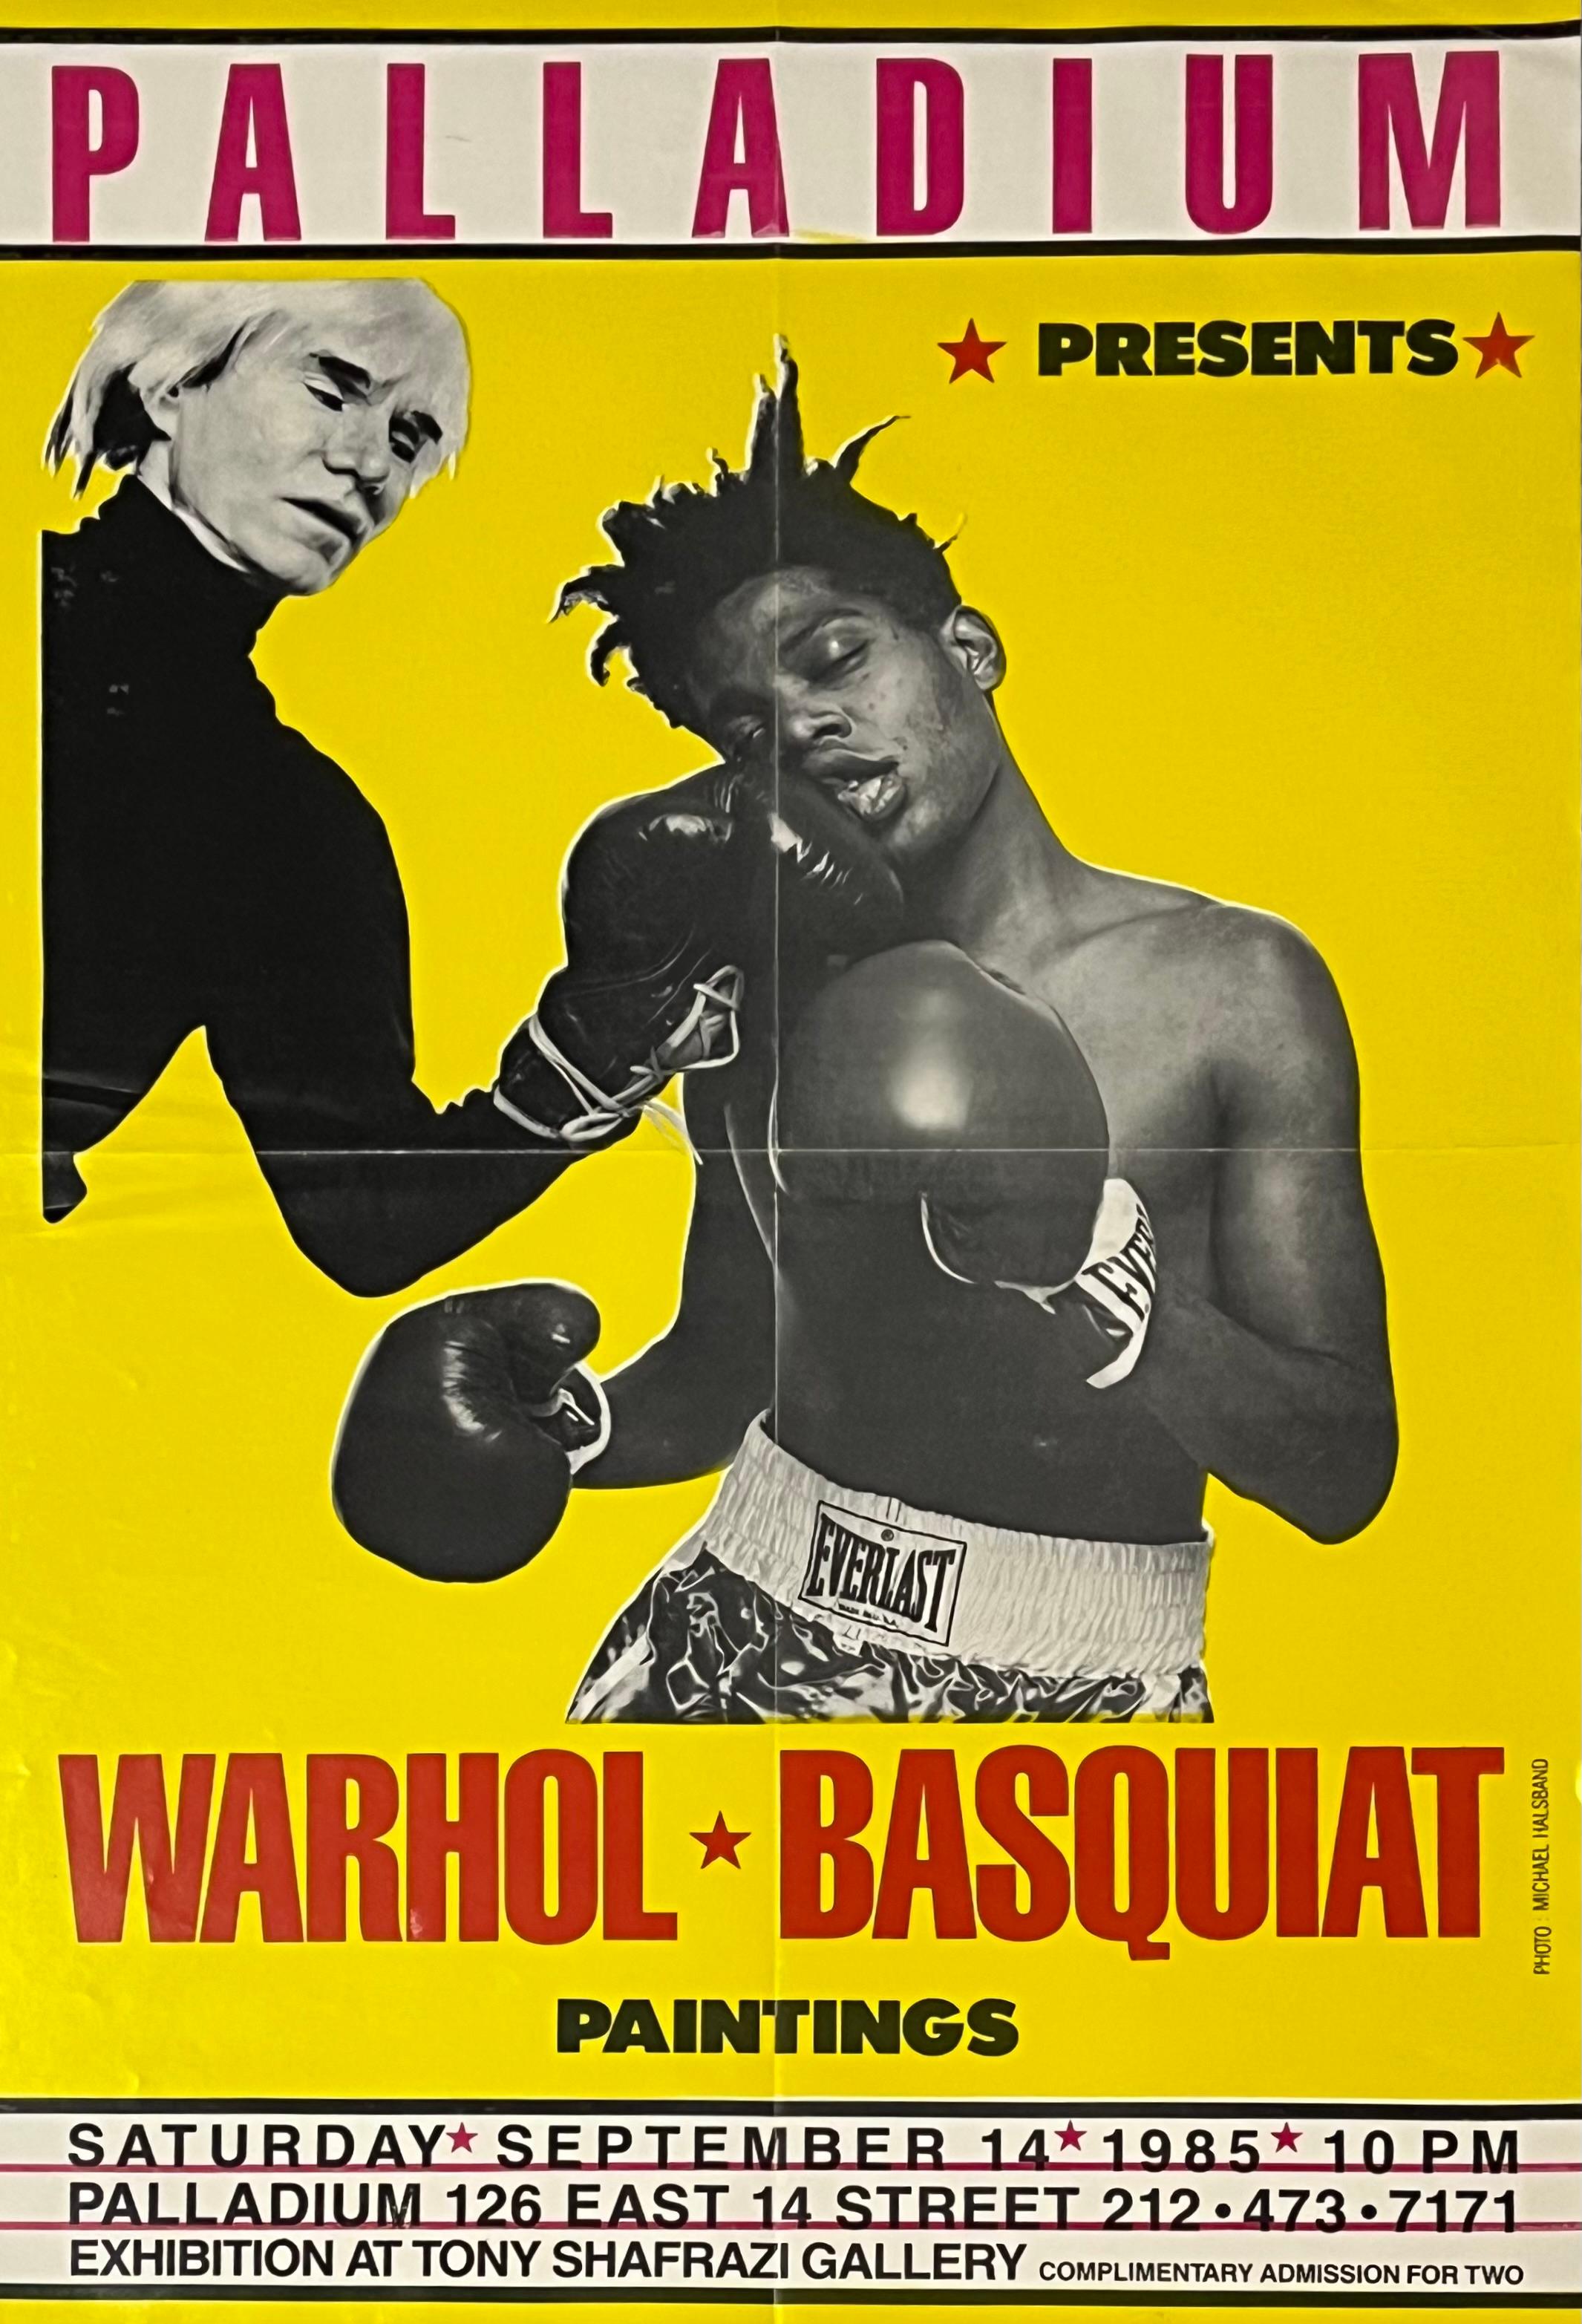 Figurative Print Michael Halsband - Affiche de boxe de Basquiat de Warhol (Basquiat Warhol boxing The Palladium)